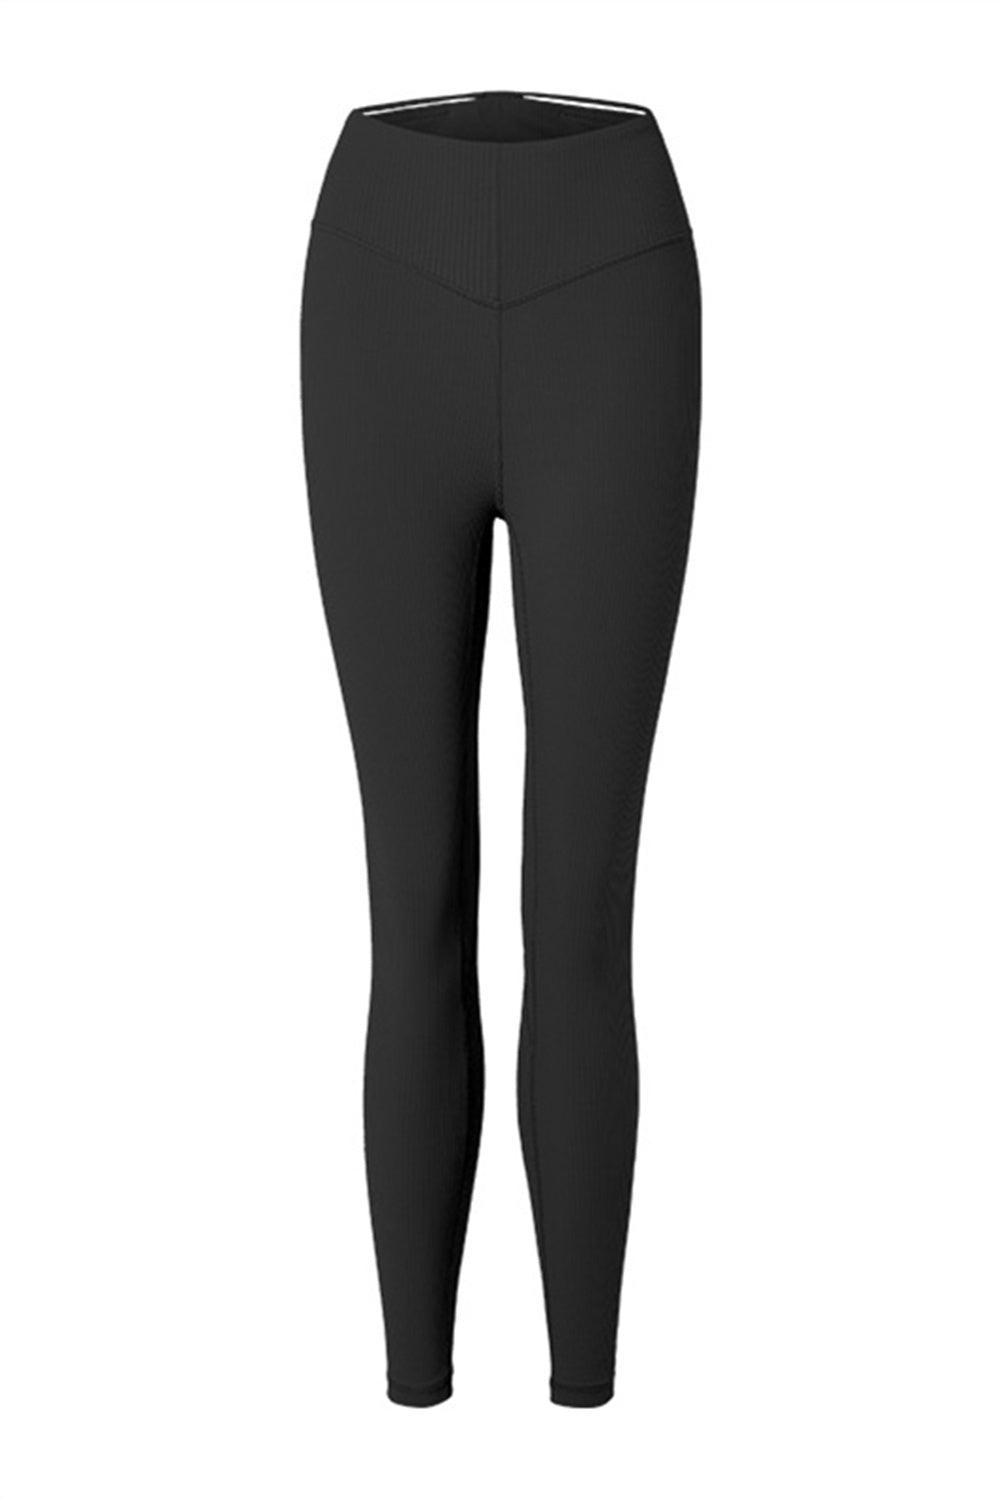 Black Wide Waistband Ribbed Skinny Yoga Pants - L & M Kee, LLC